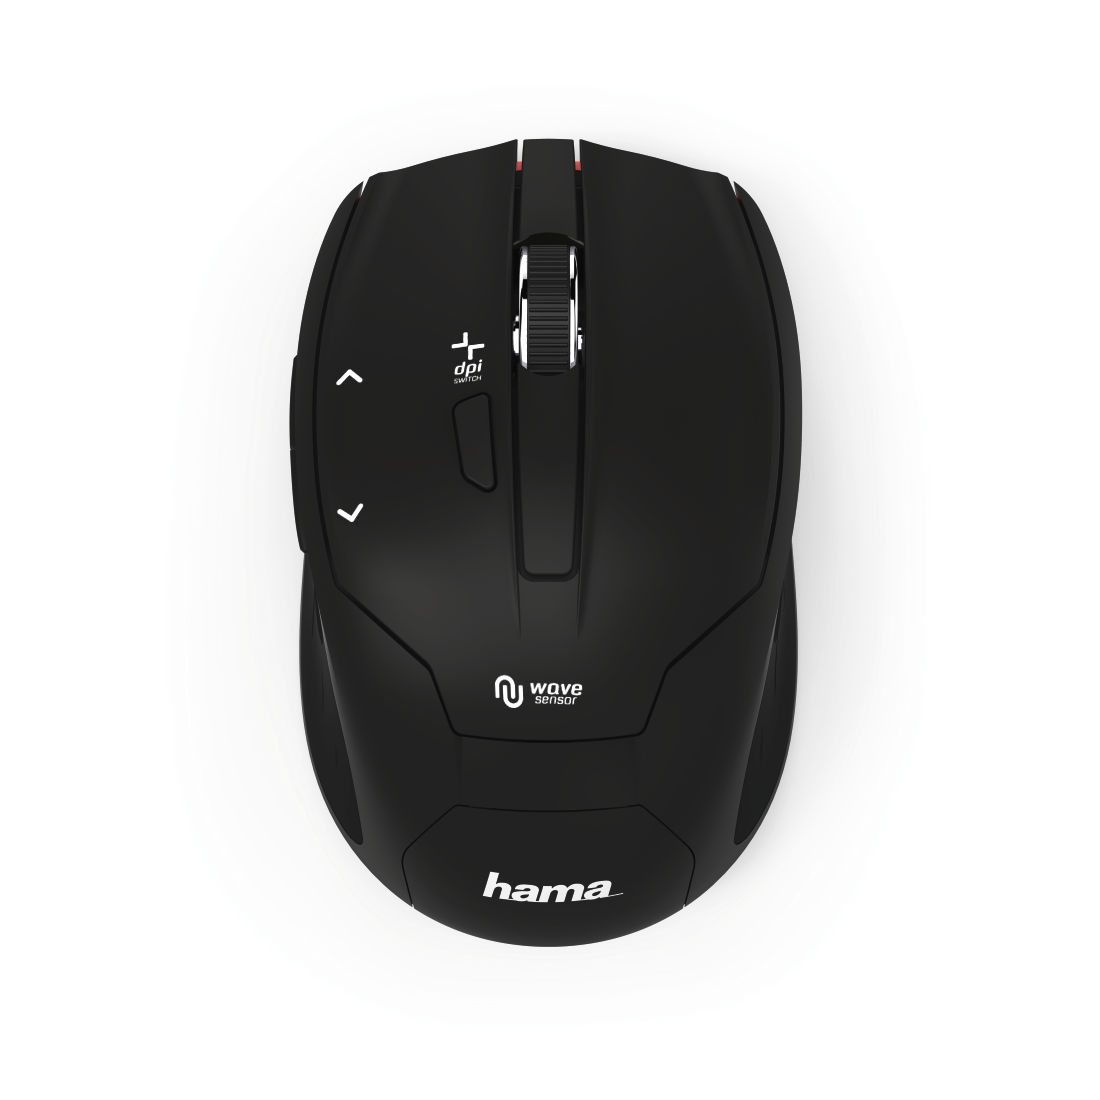 Hama "Milano" compact wireless mouse, black